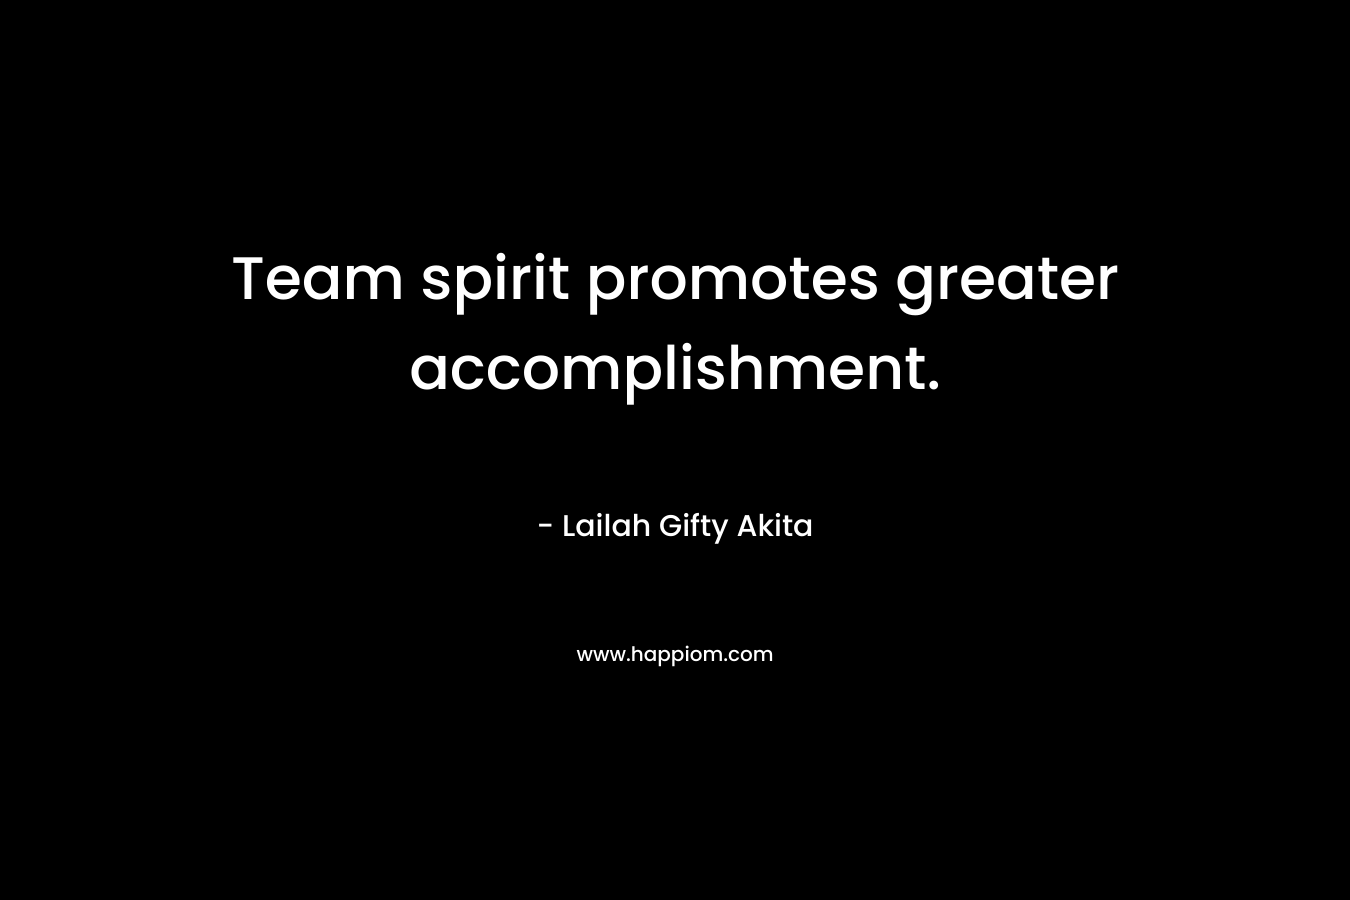 Team spirit promotes greater accomplishment.